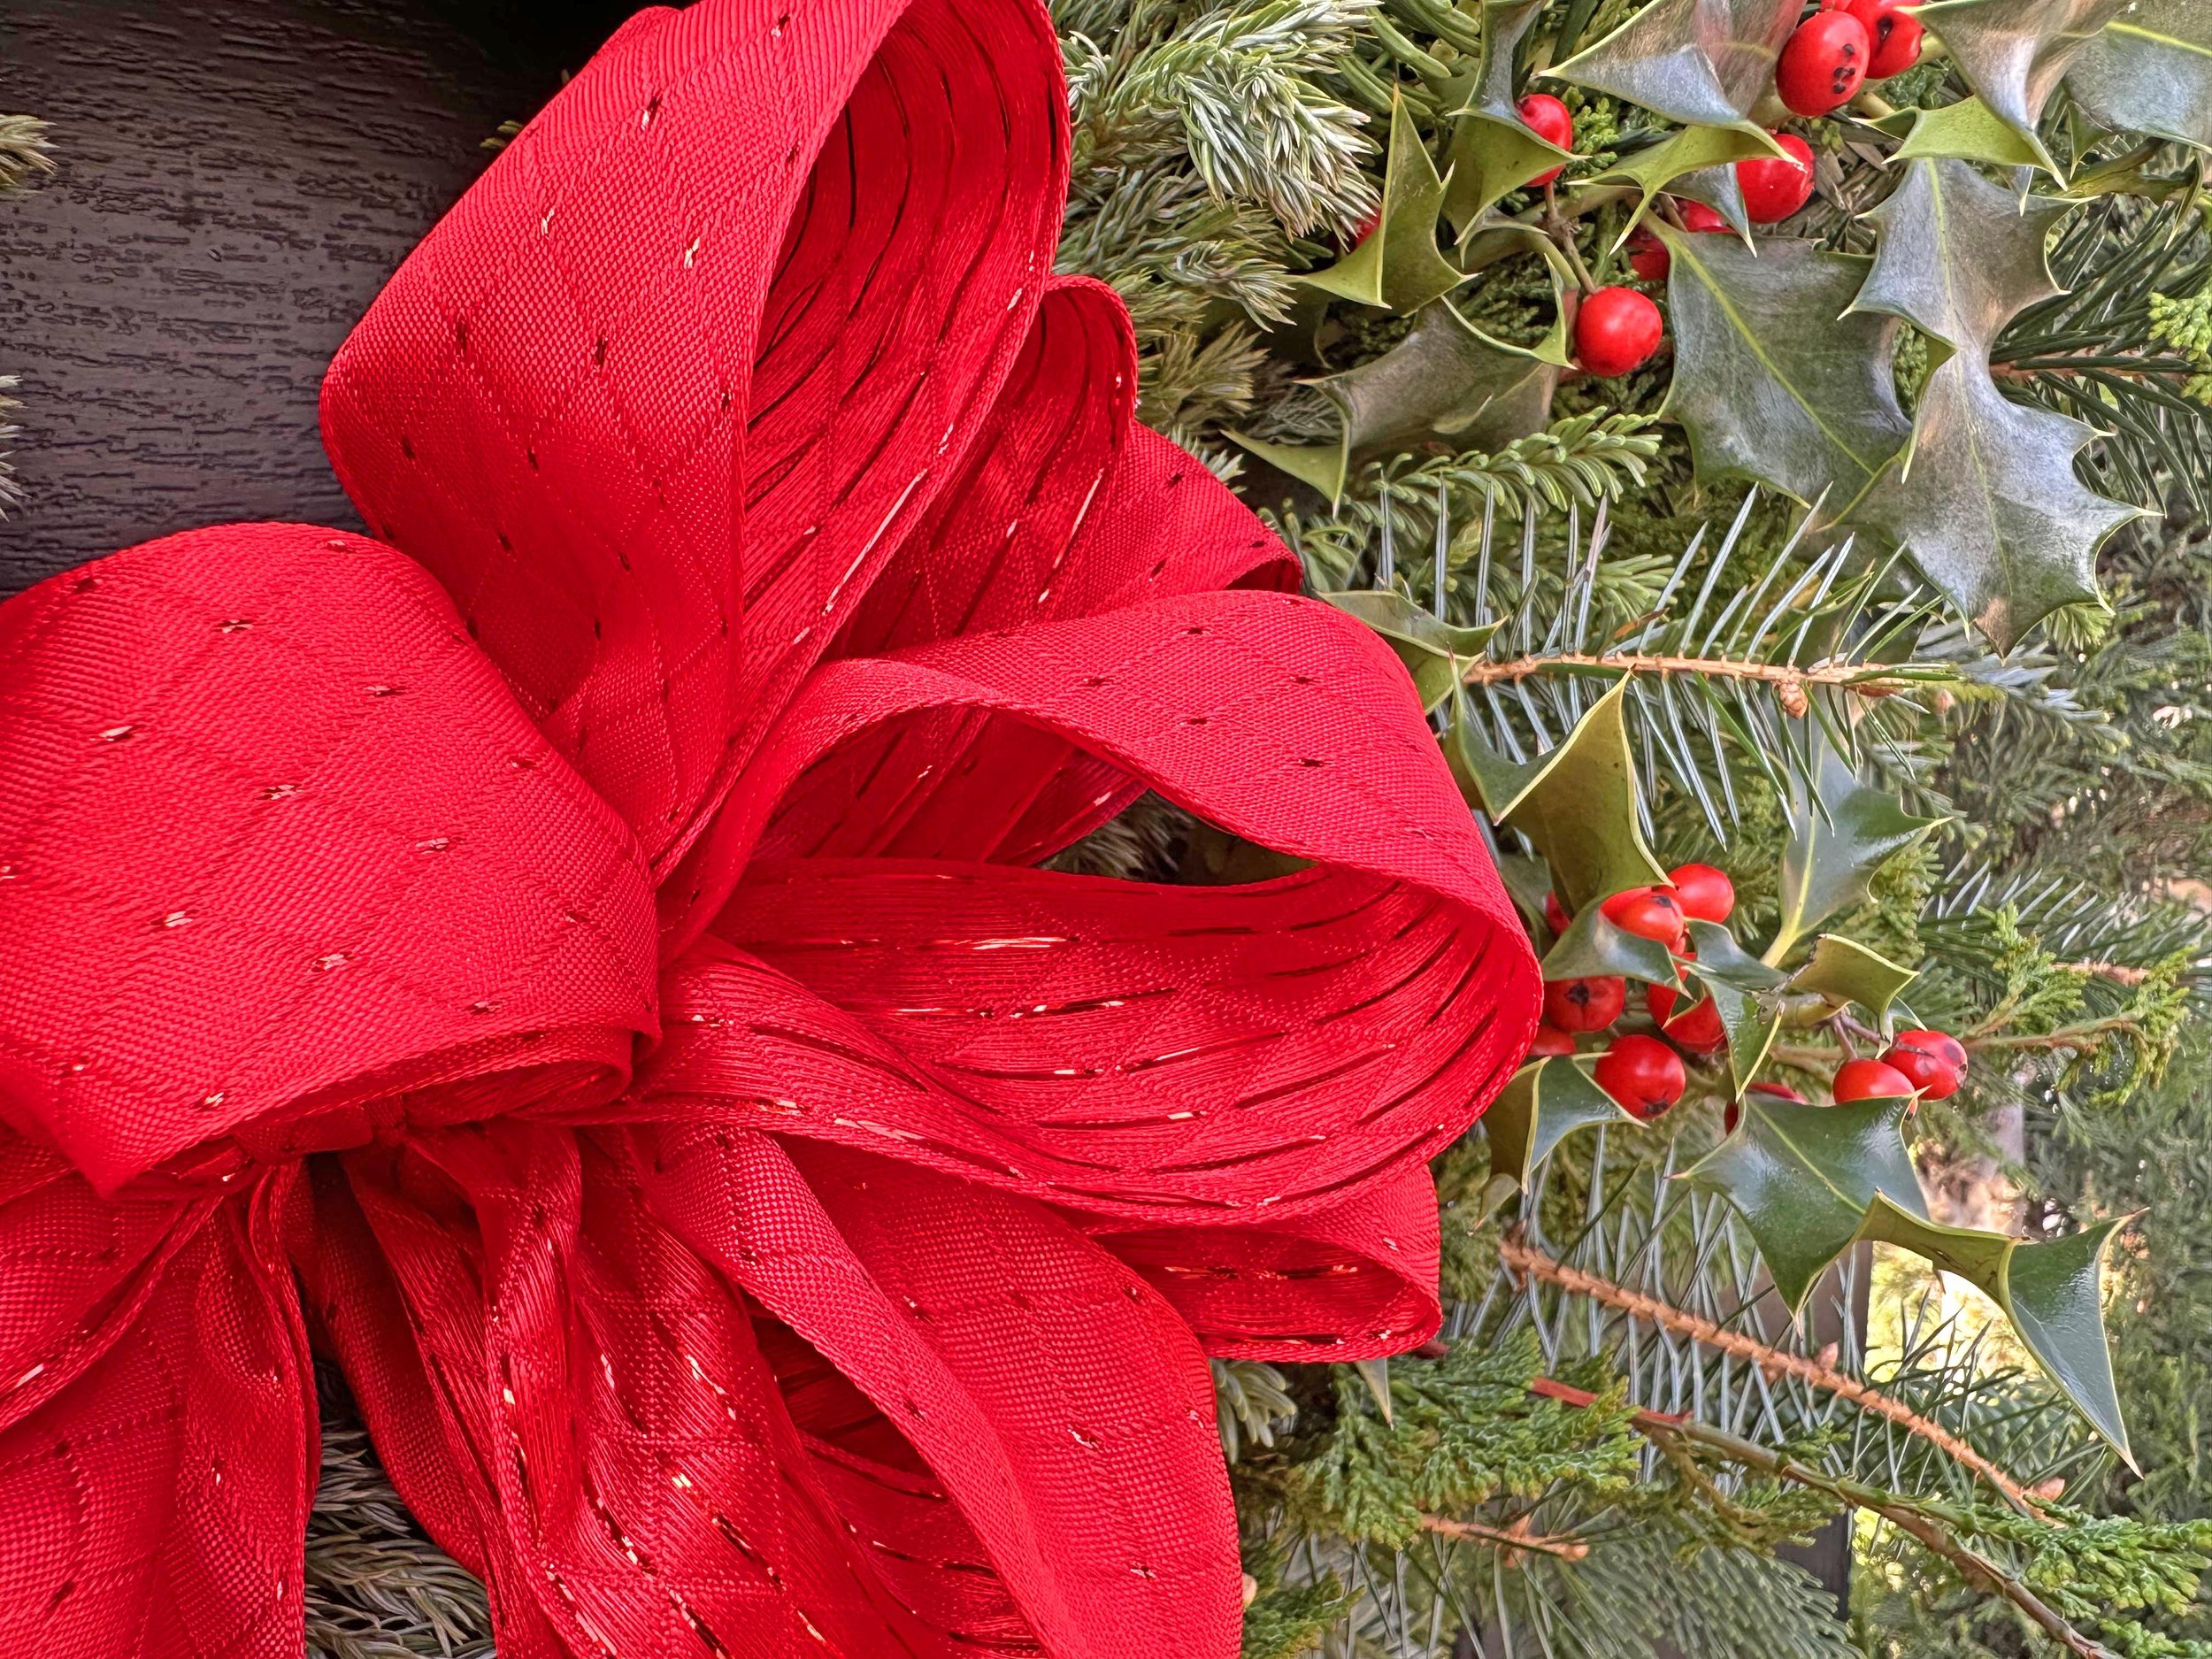 Wreath #1 w:red bow up close2.jpg